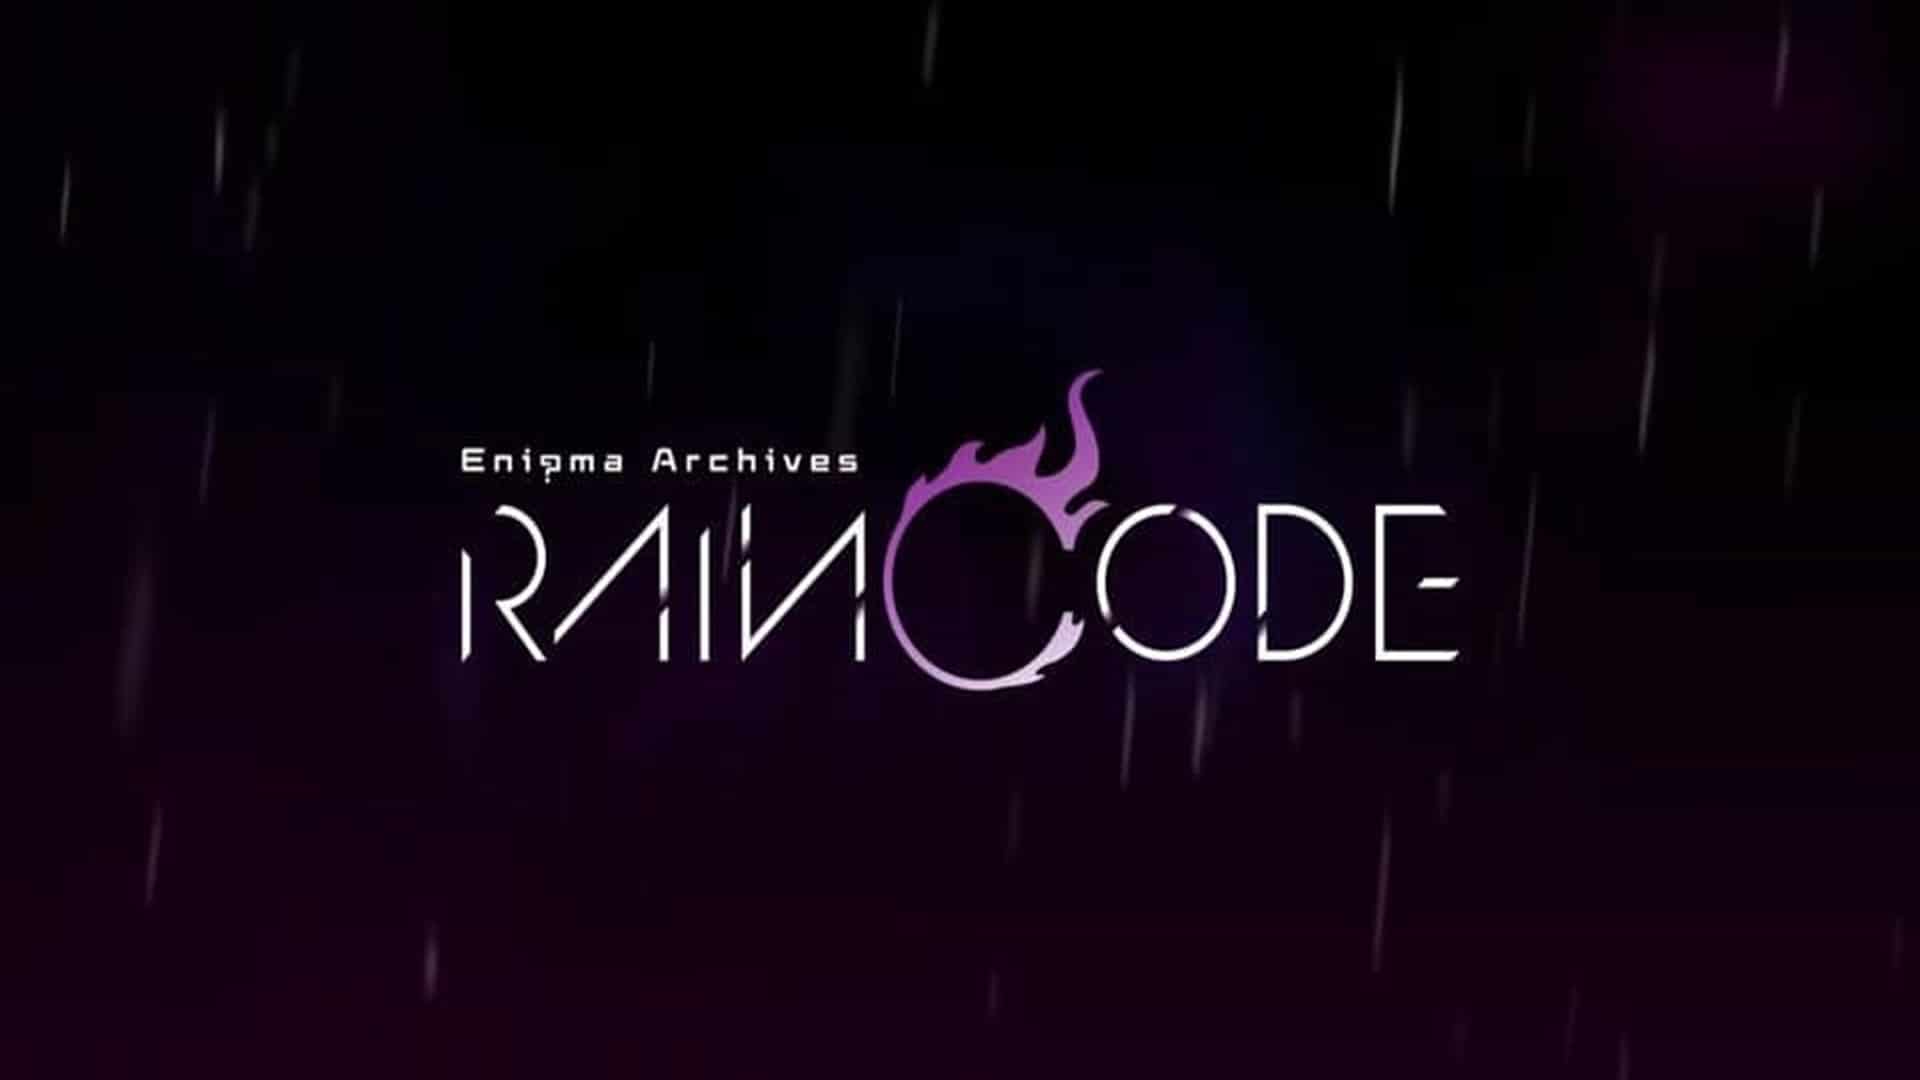 Enigma Archives: Rain Code obtiene una marca oficial registrada, GamersRD